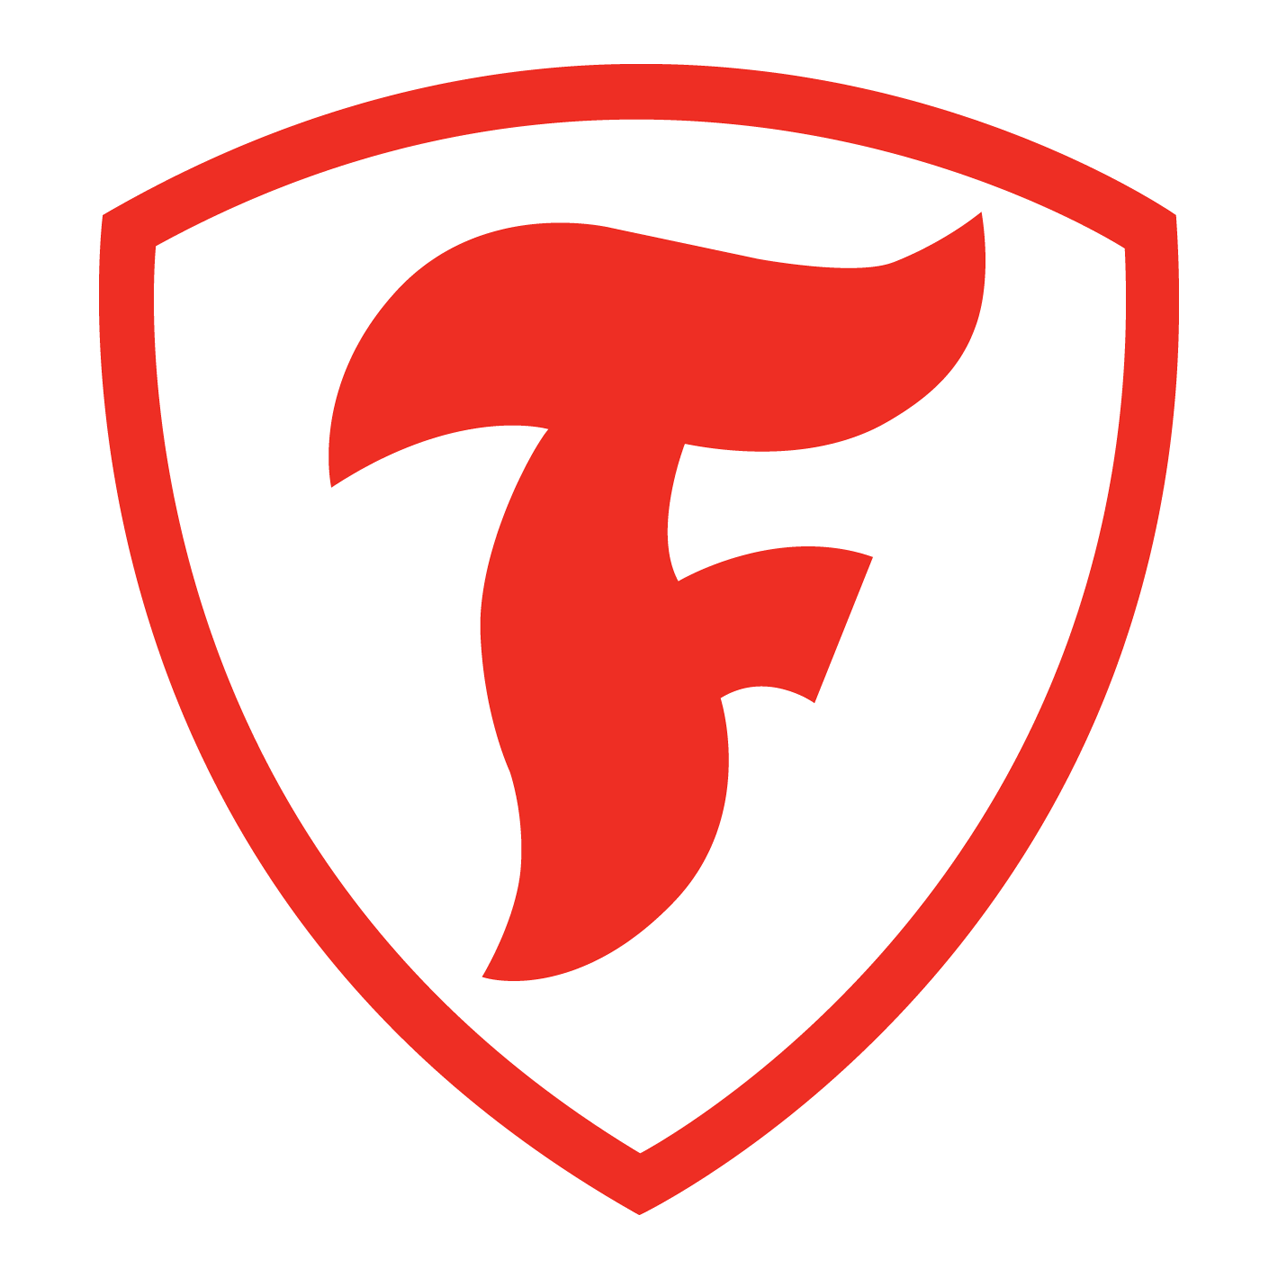 Who Has Red F Logo - Firestone logo